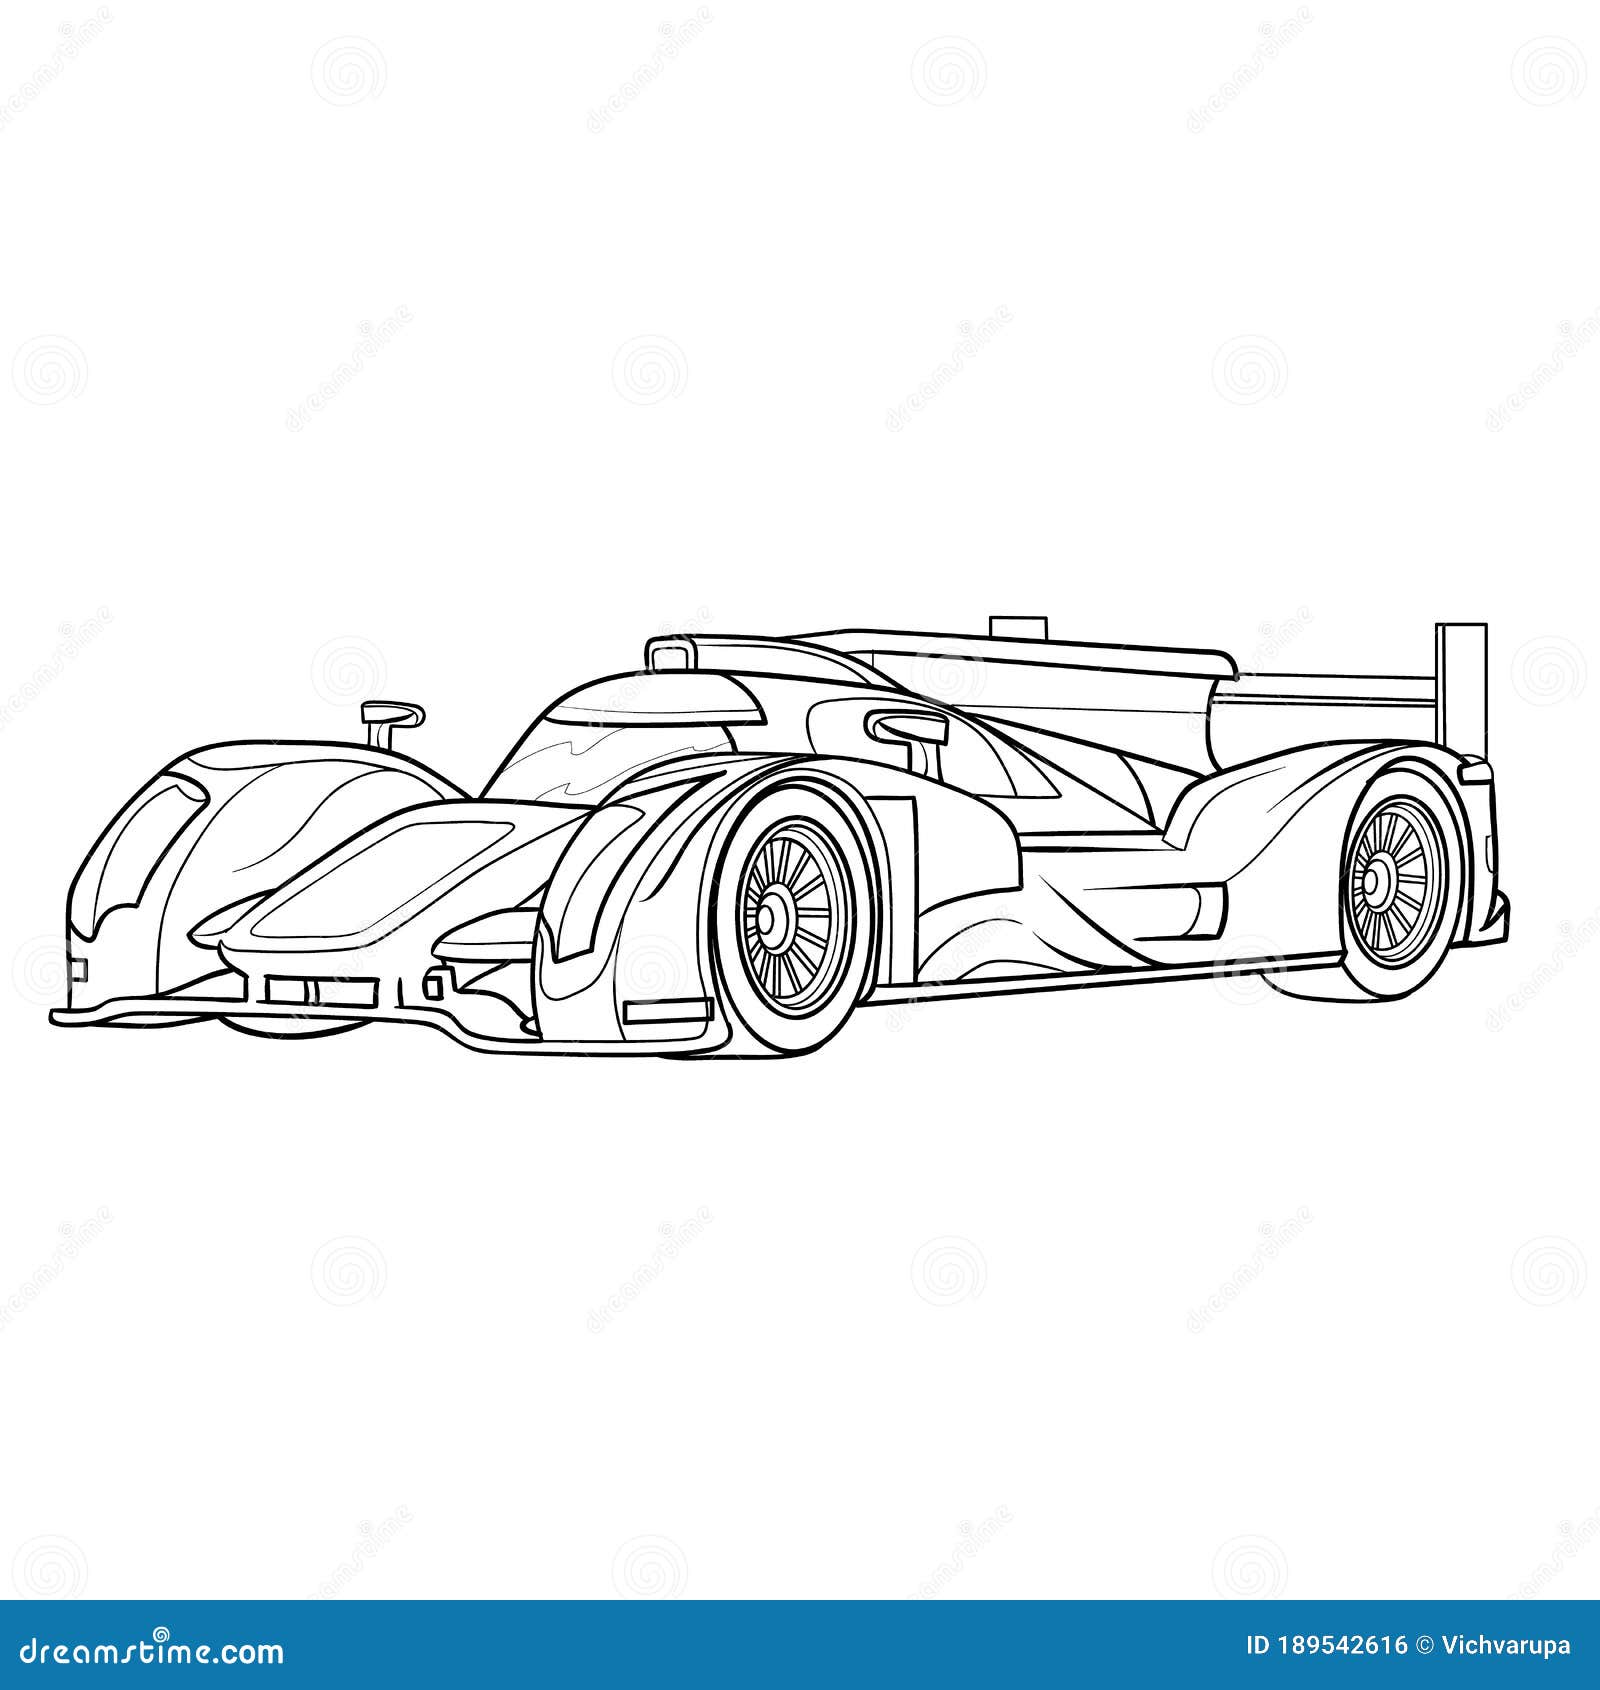 12736 Race Car Sketch Images Stock Photos  Vectors  Shutterstock